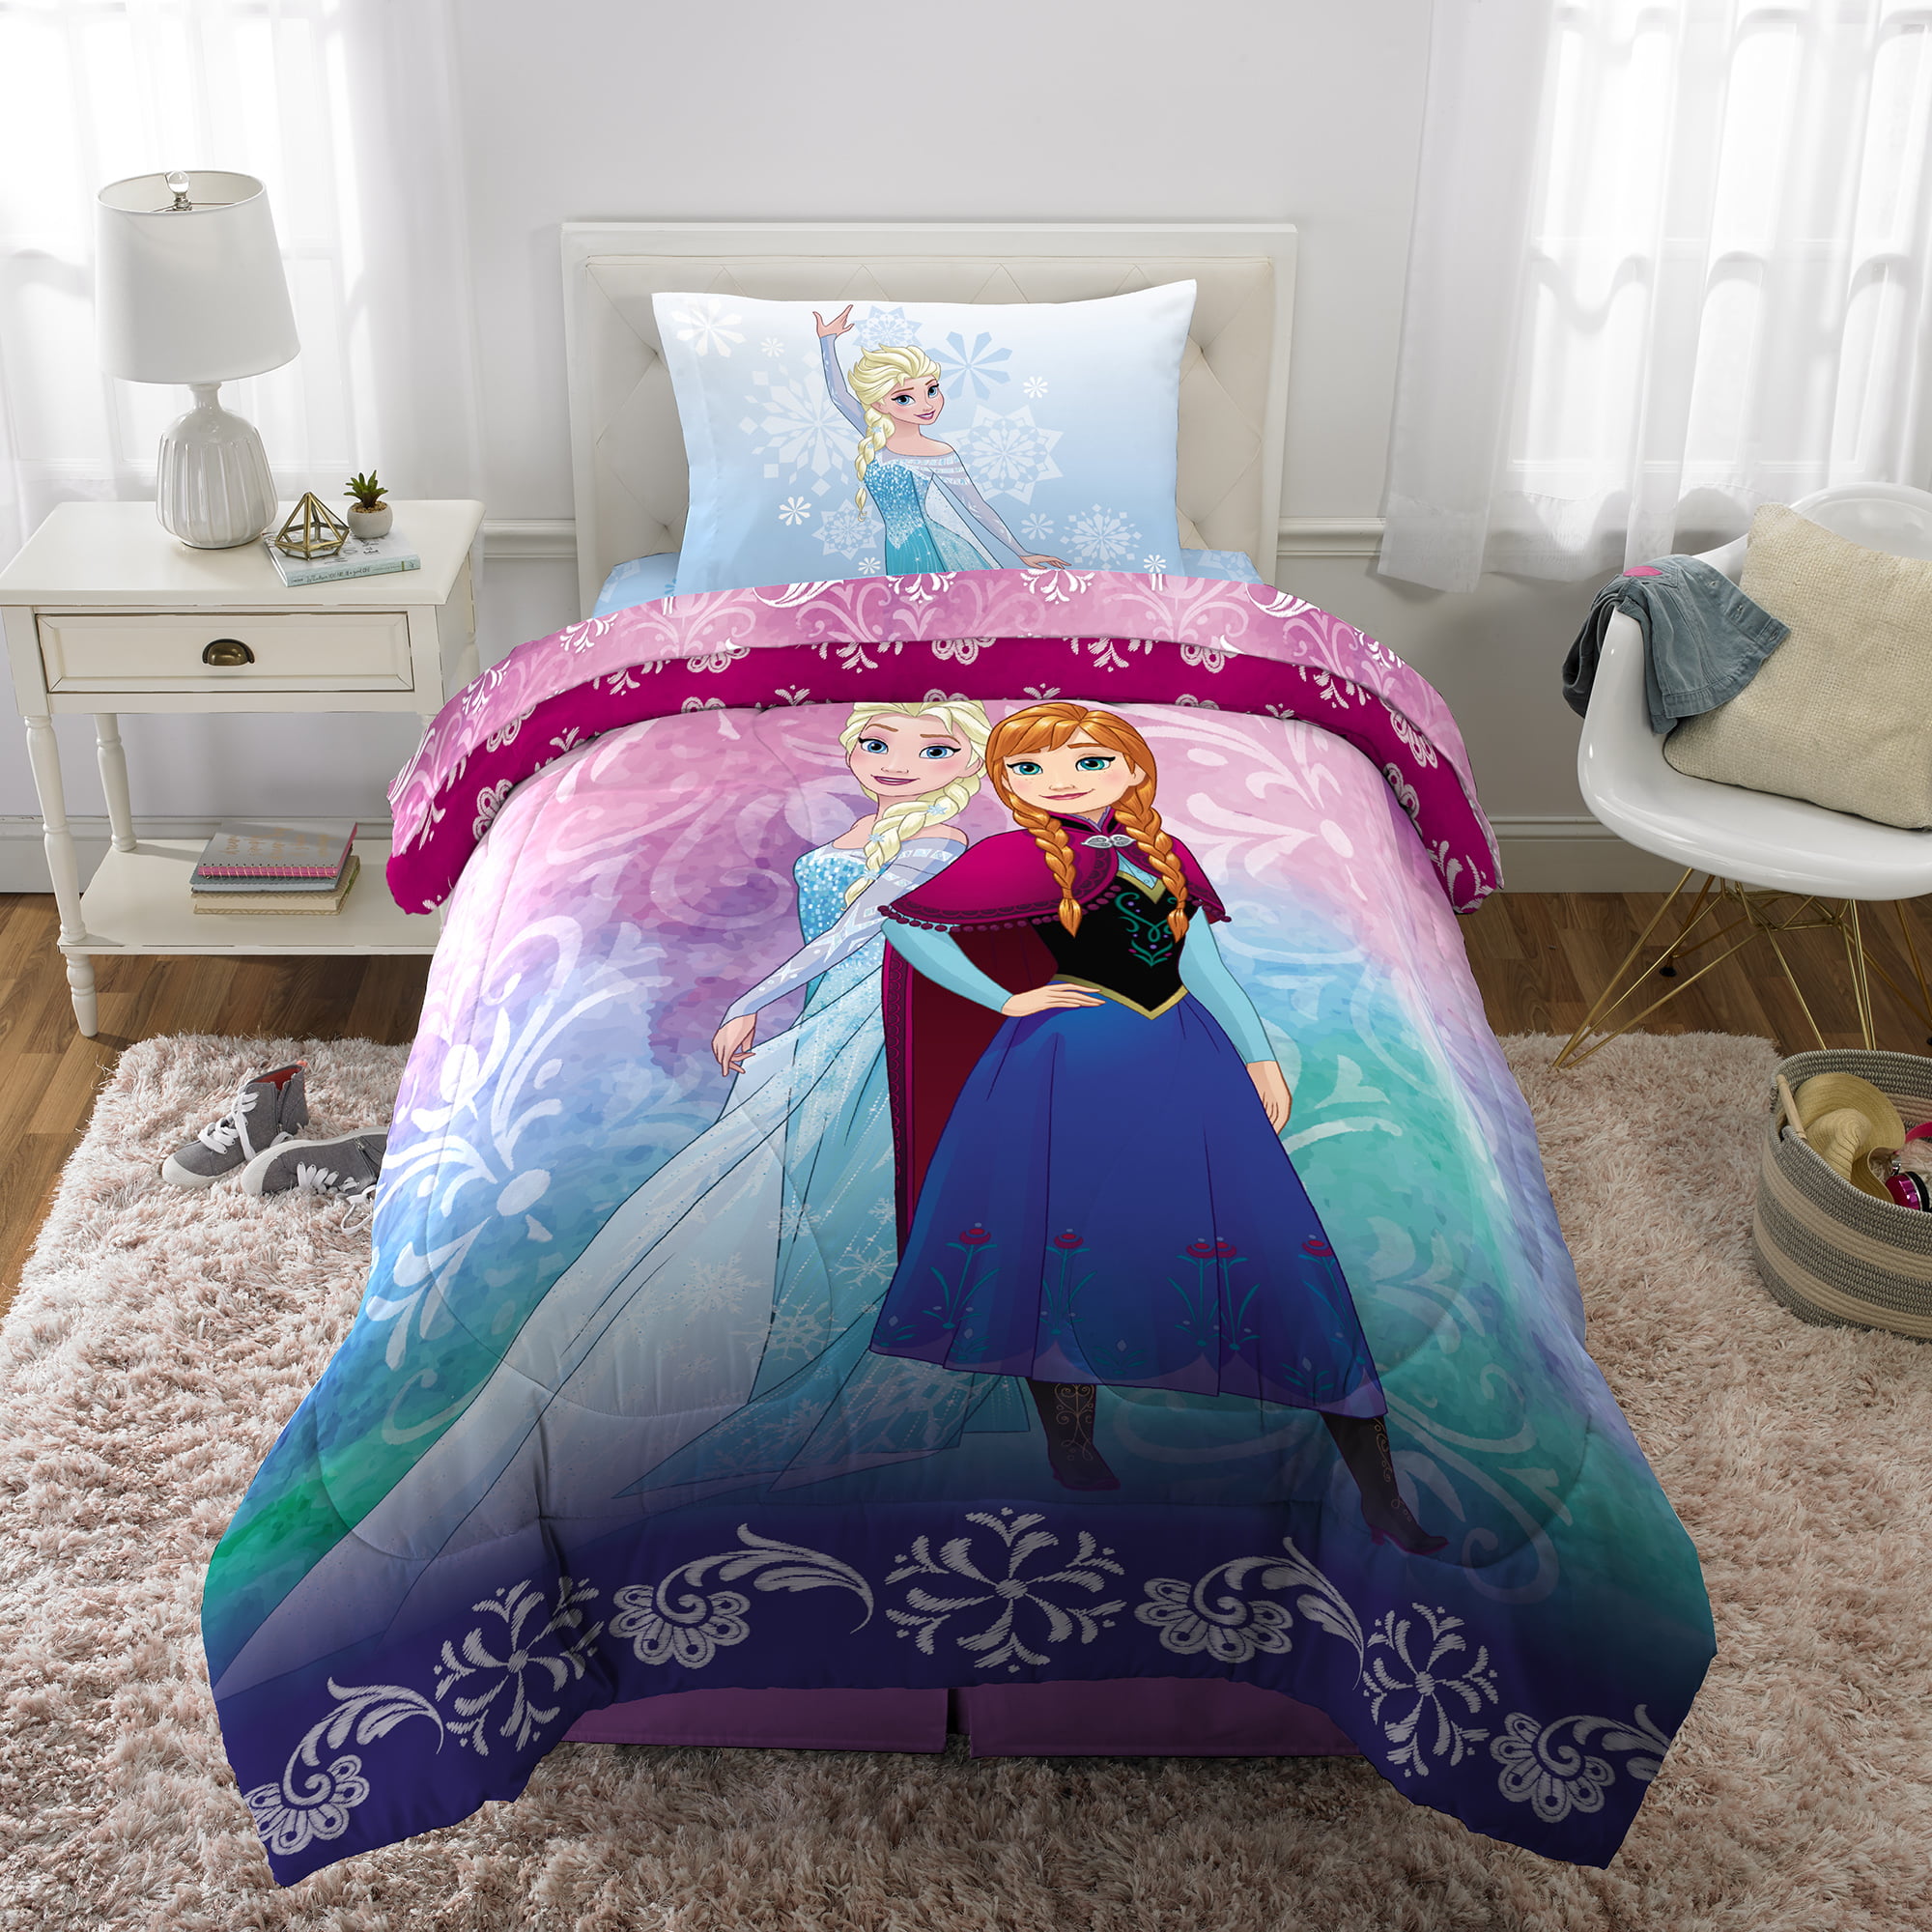 Disney Frozen Mz01jc Elsa Anna Bed In, Elsa And Anna Bunk Beds